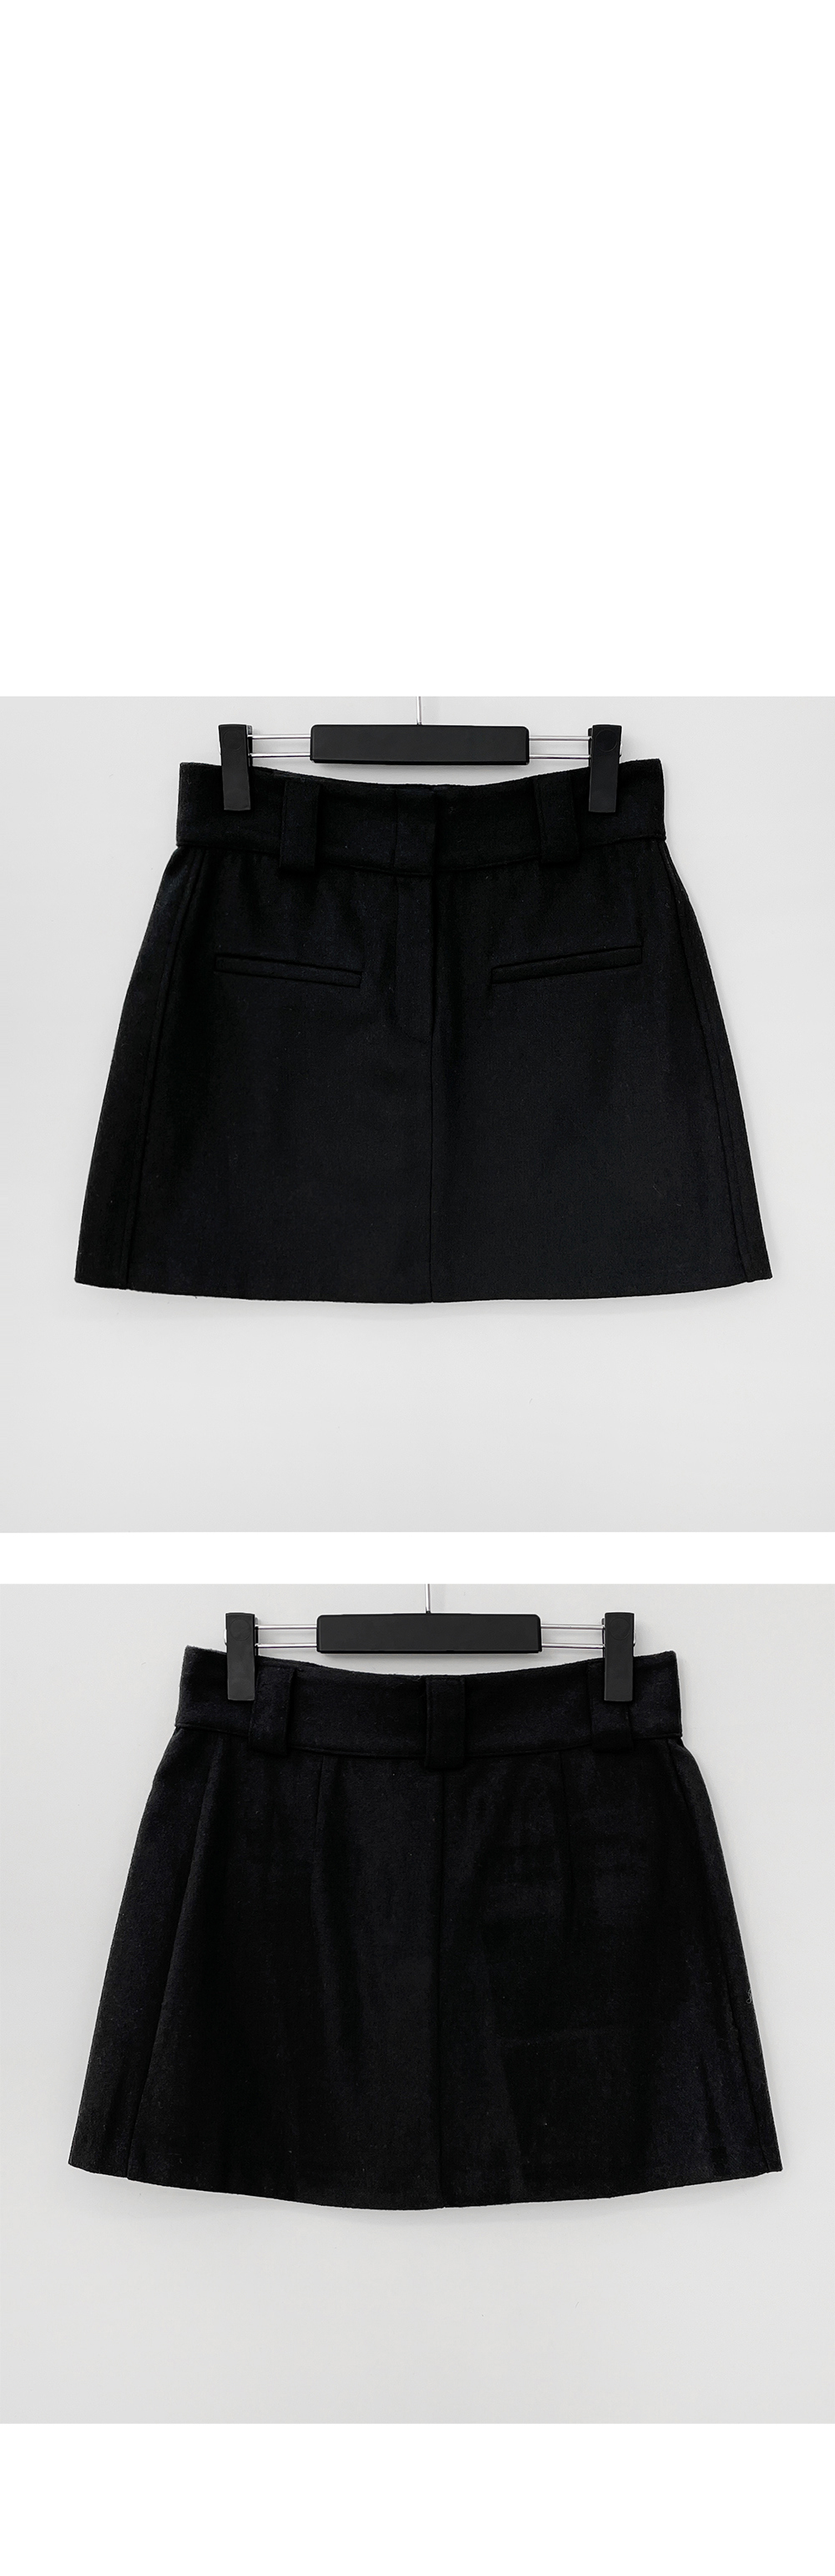 mini skirt charcoal color image-S2L1